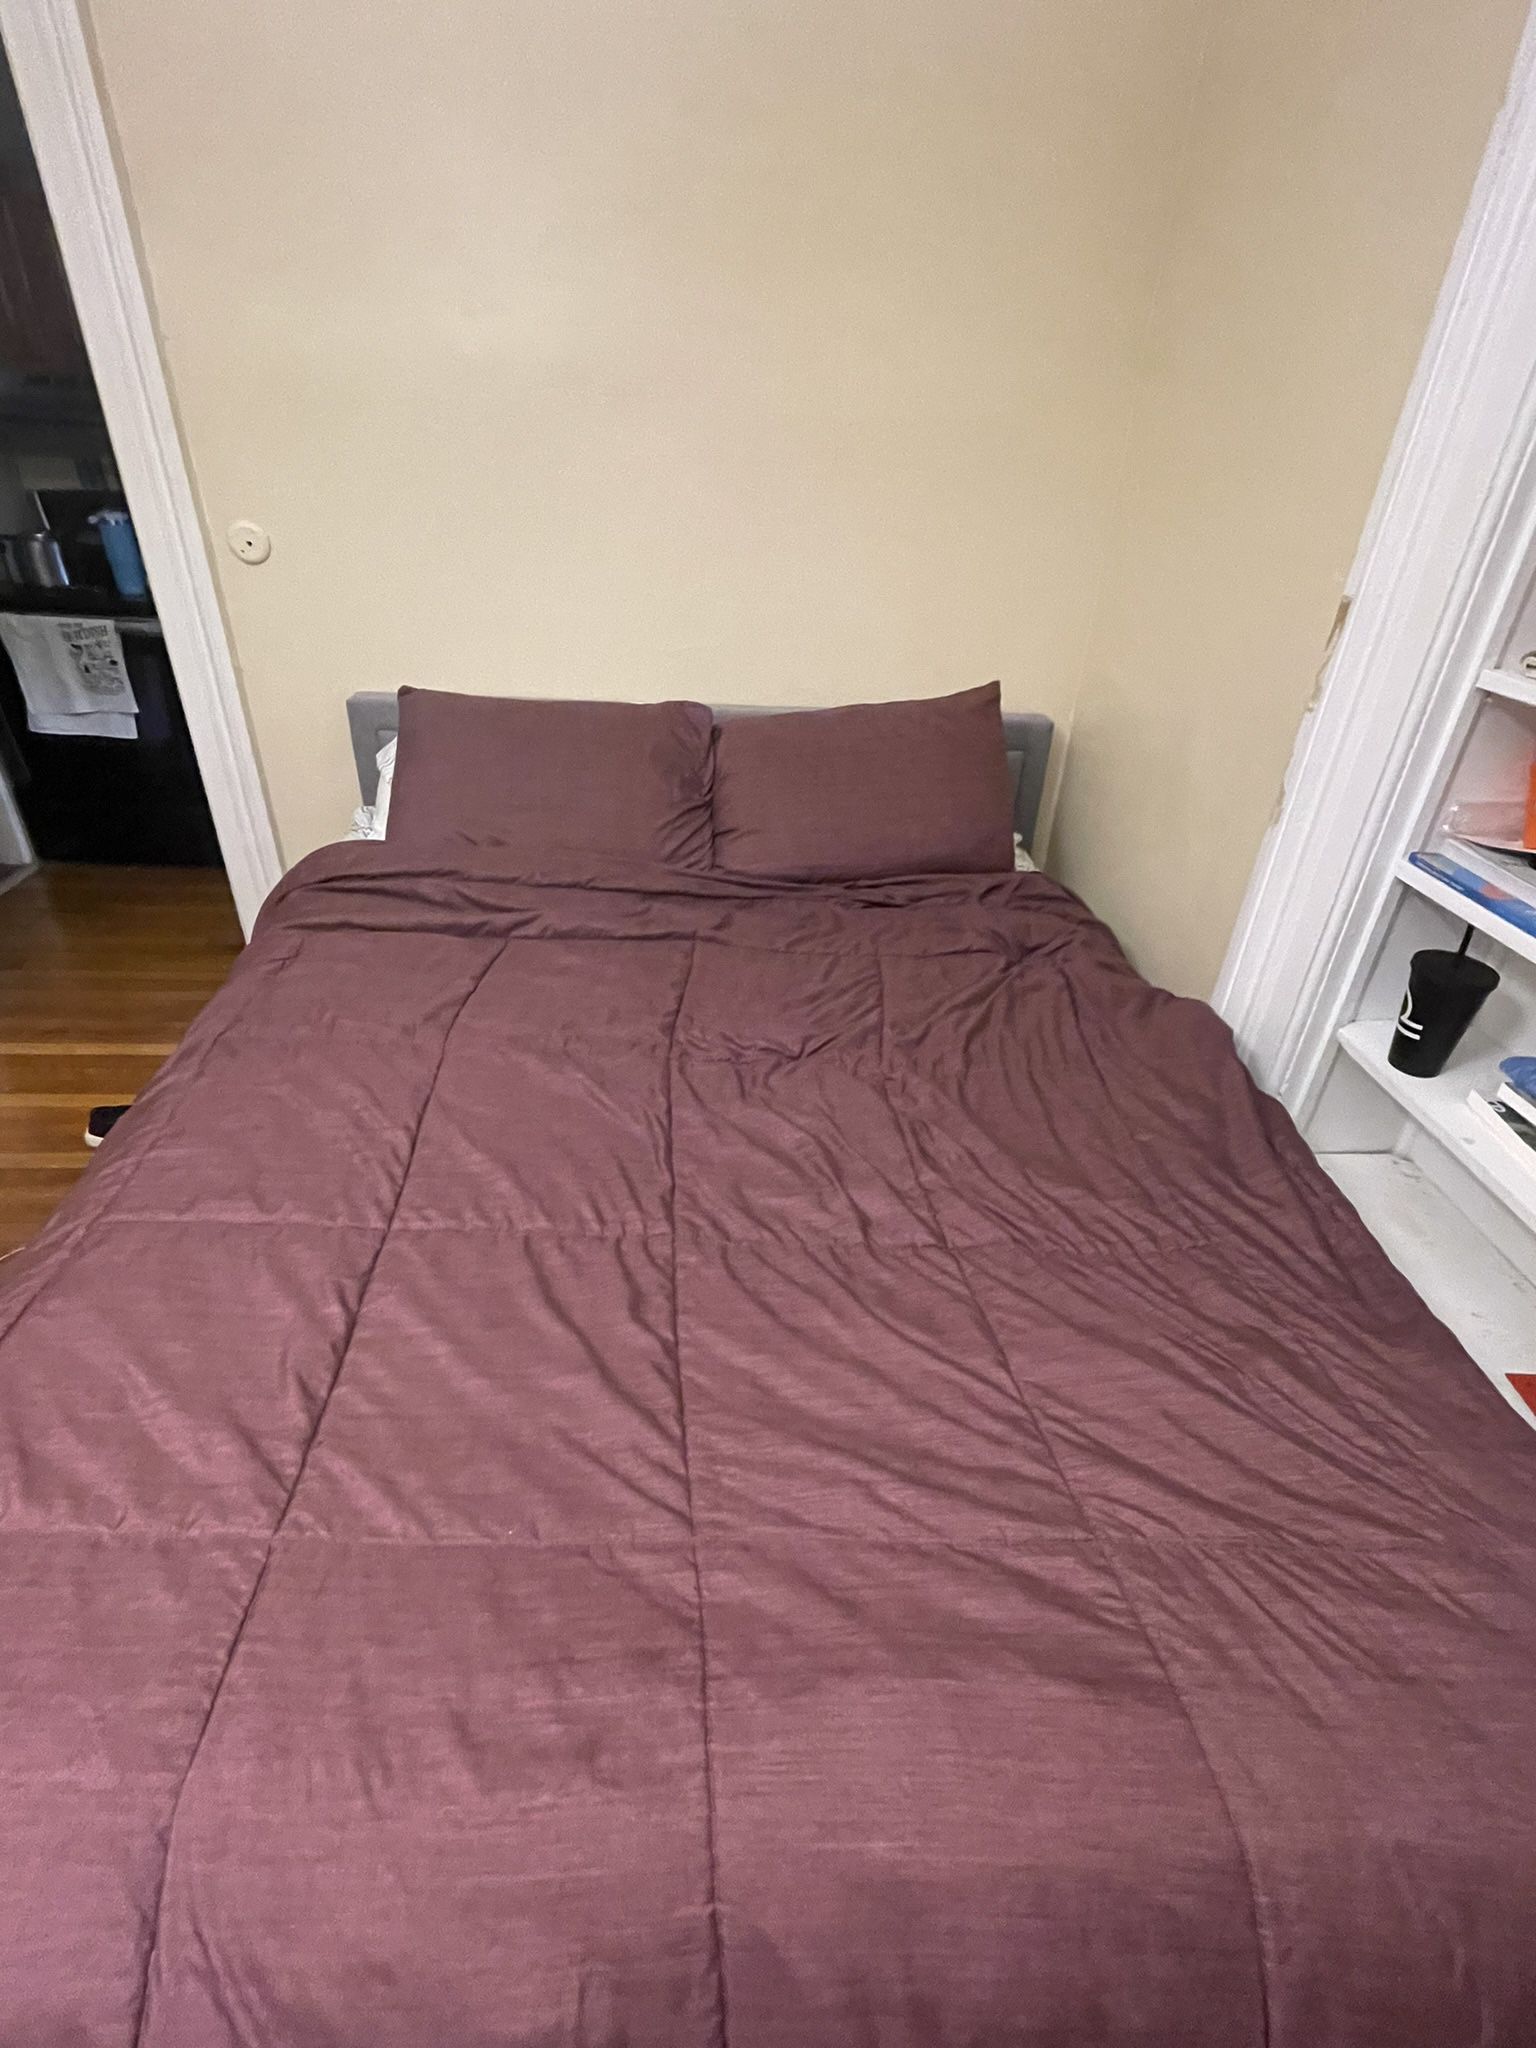 Queen bed And mattress